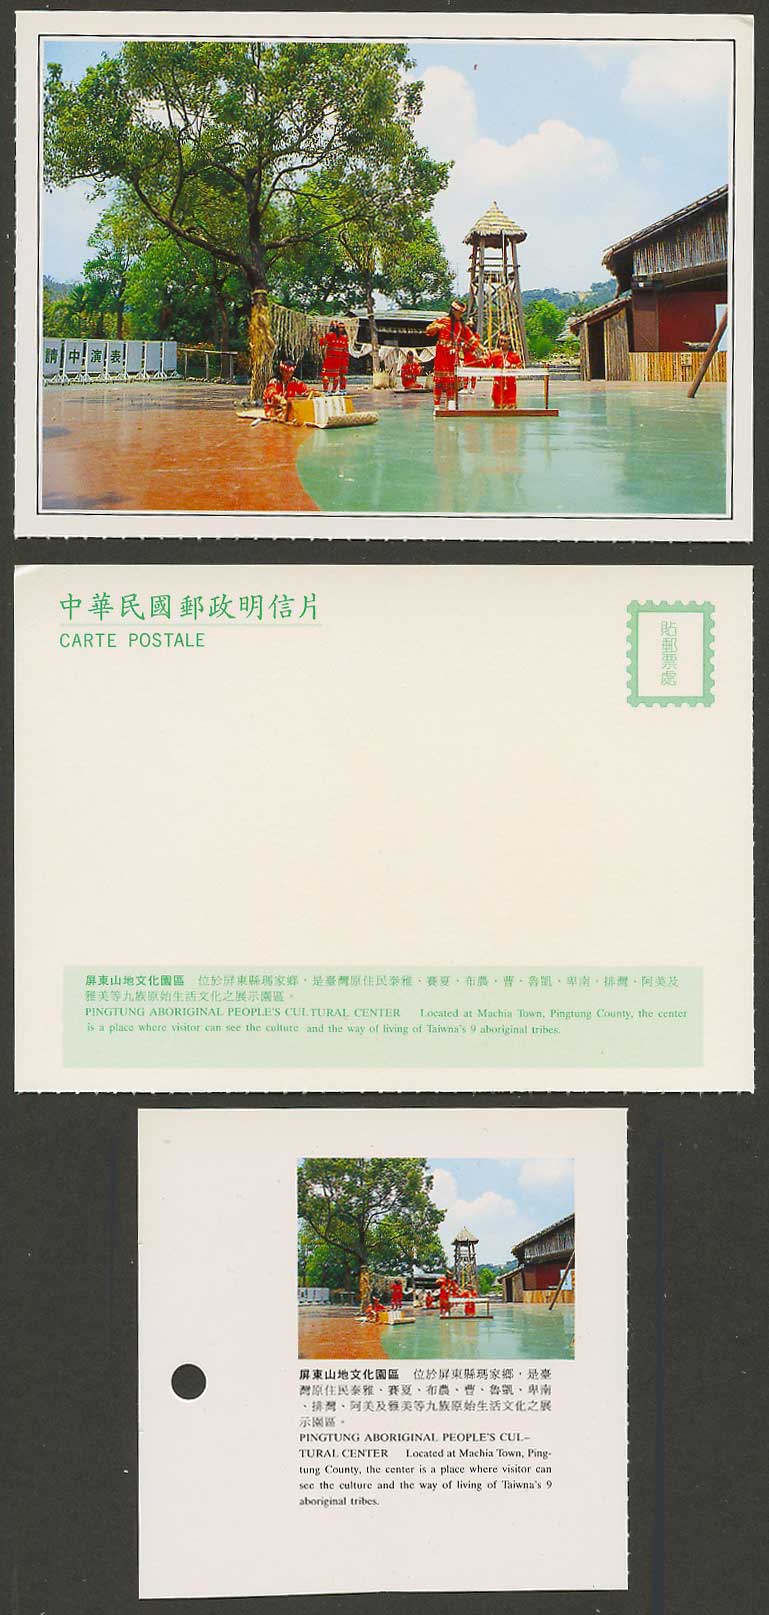 Taiwan Formosa China Postcard Pingtung Aboriginal People's Cultural Centre山地文化園區